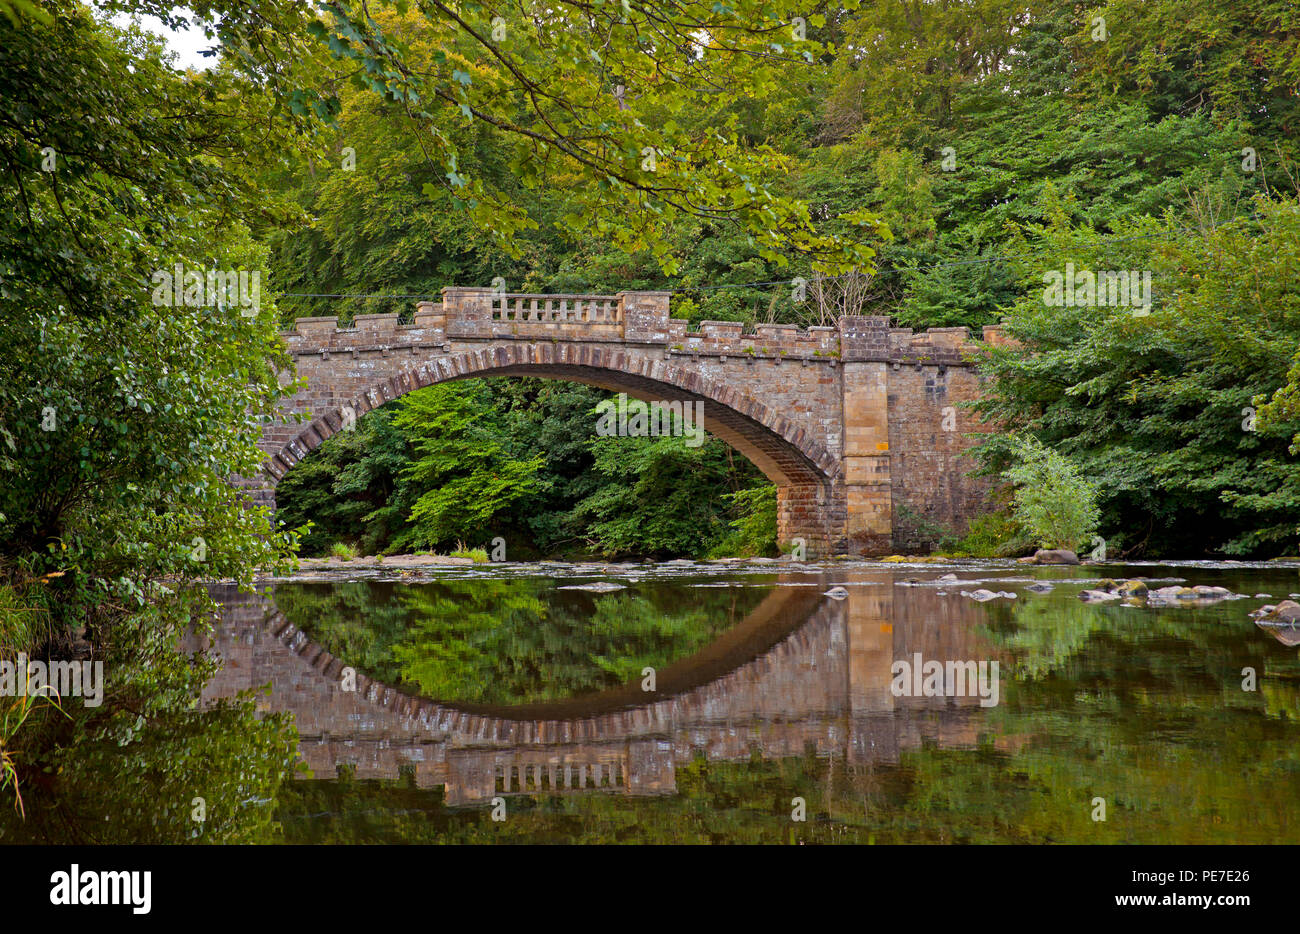 Nasmyth ponte sul fiume, mandorla, Almondell, East Calder, West Lothian, Scozia UK Foto Stock